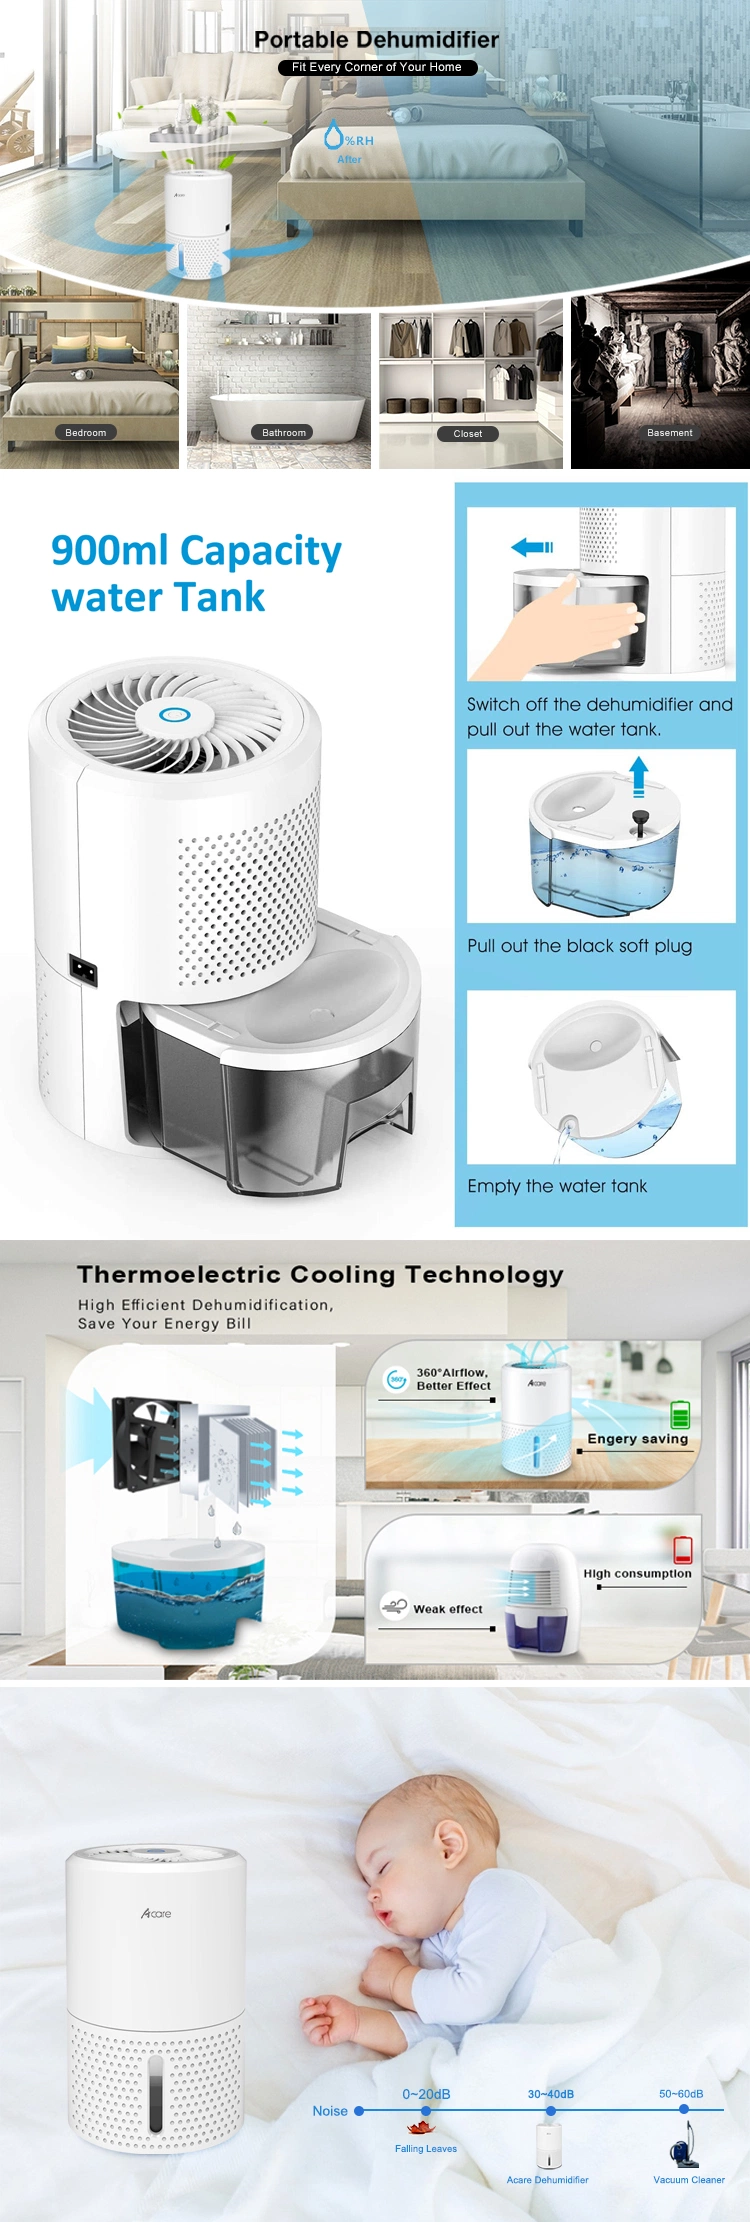 Air Dryer Whole House Small Portable Dehumidify Home Dehumidifier